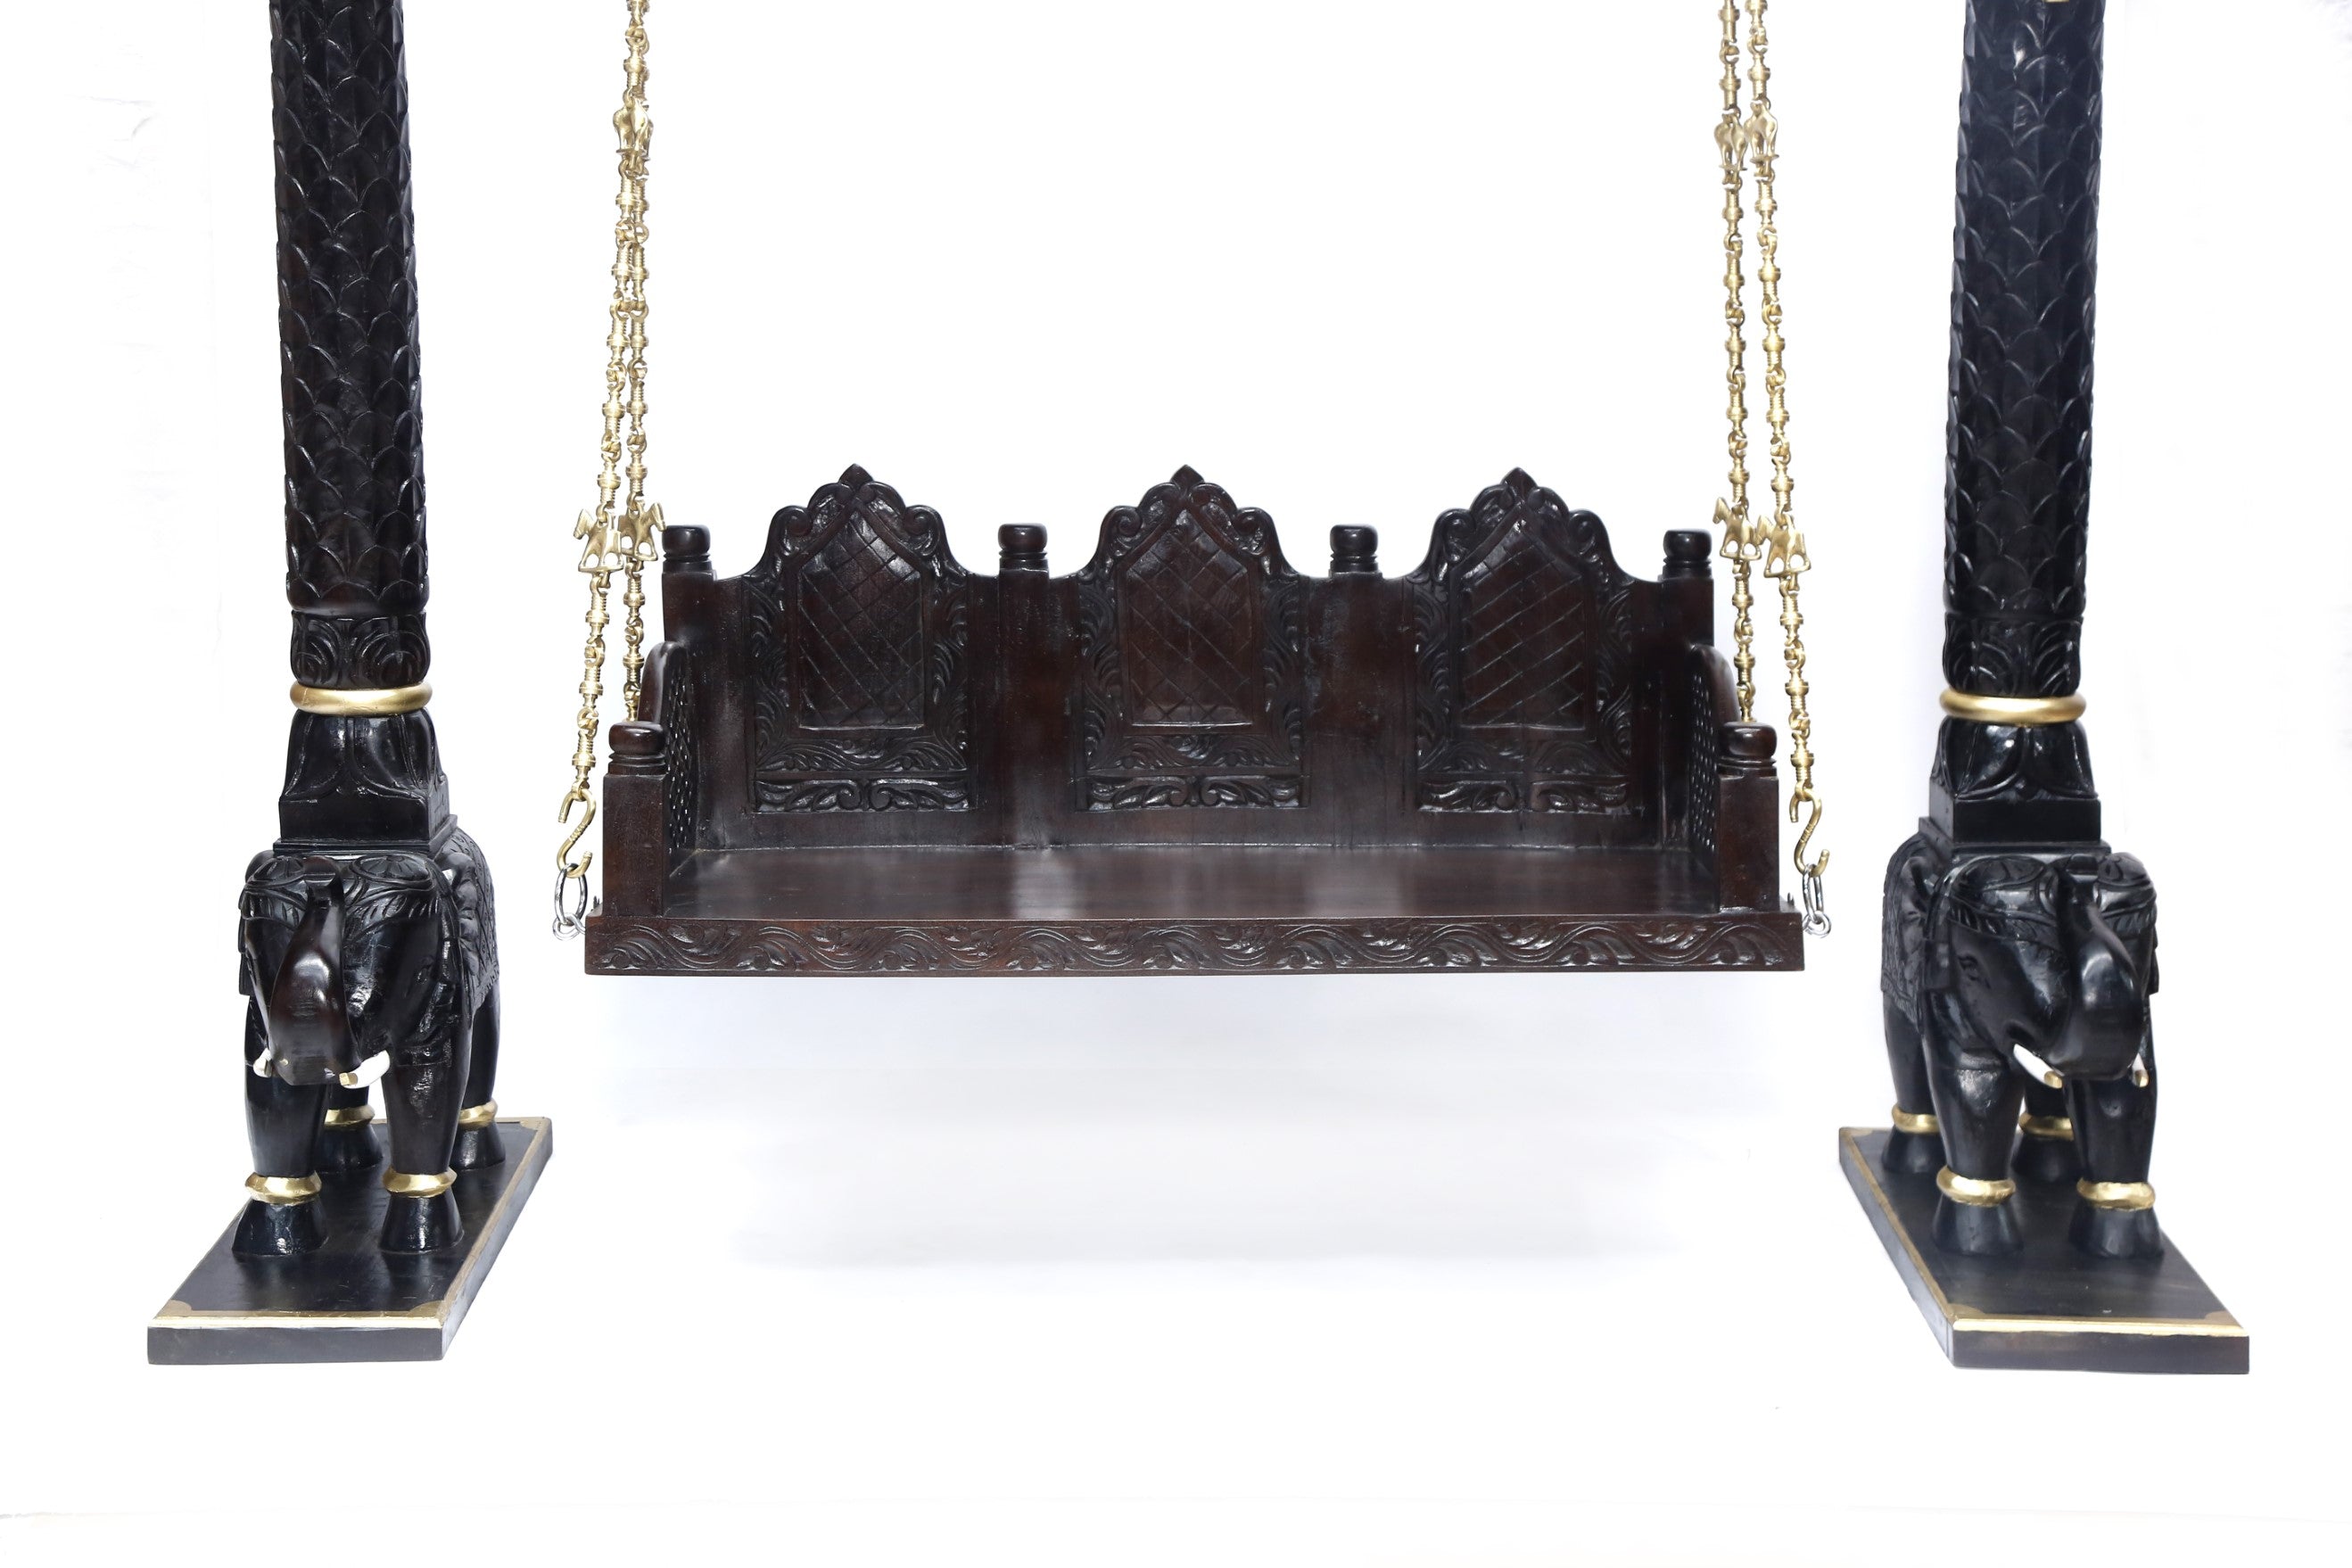 Wooden Brass Chain Royal Carved Elephants pillar Swing swing